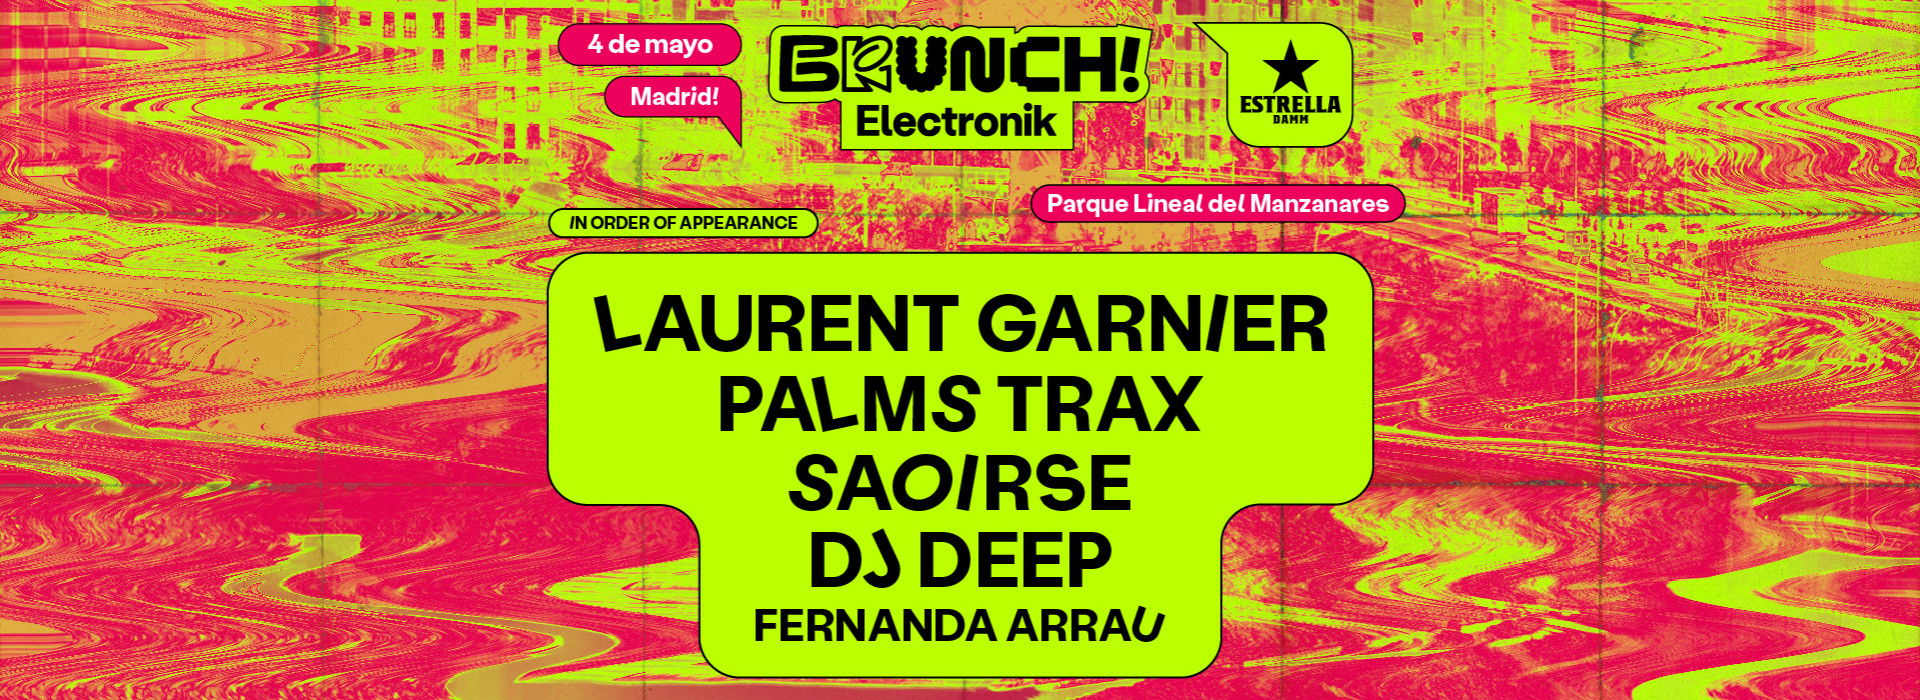 Brunch Electronik Madrid #1: Laurent Garnier, Palms Trax, Saoirse y más